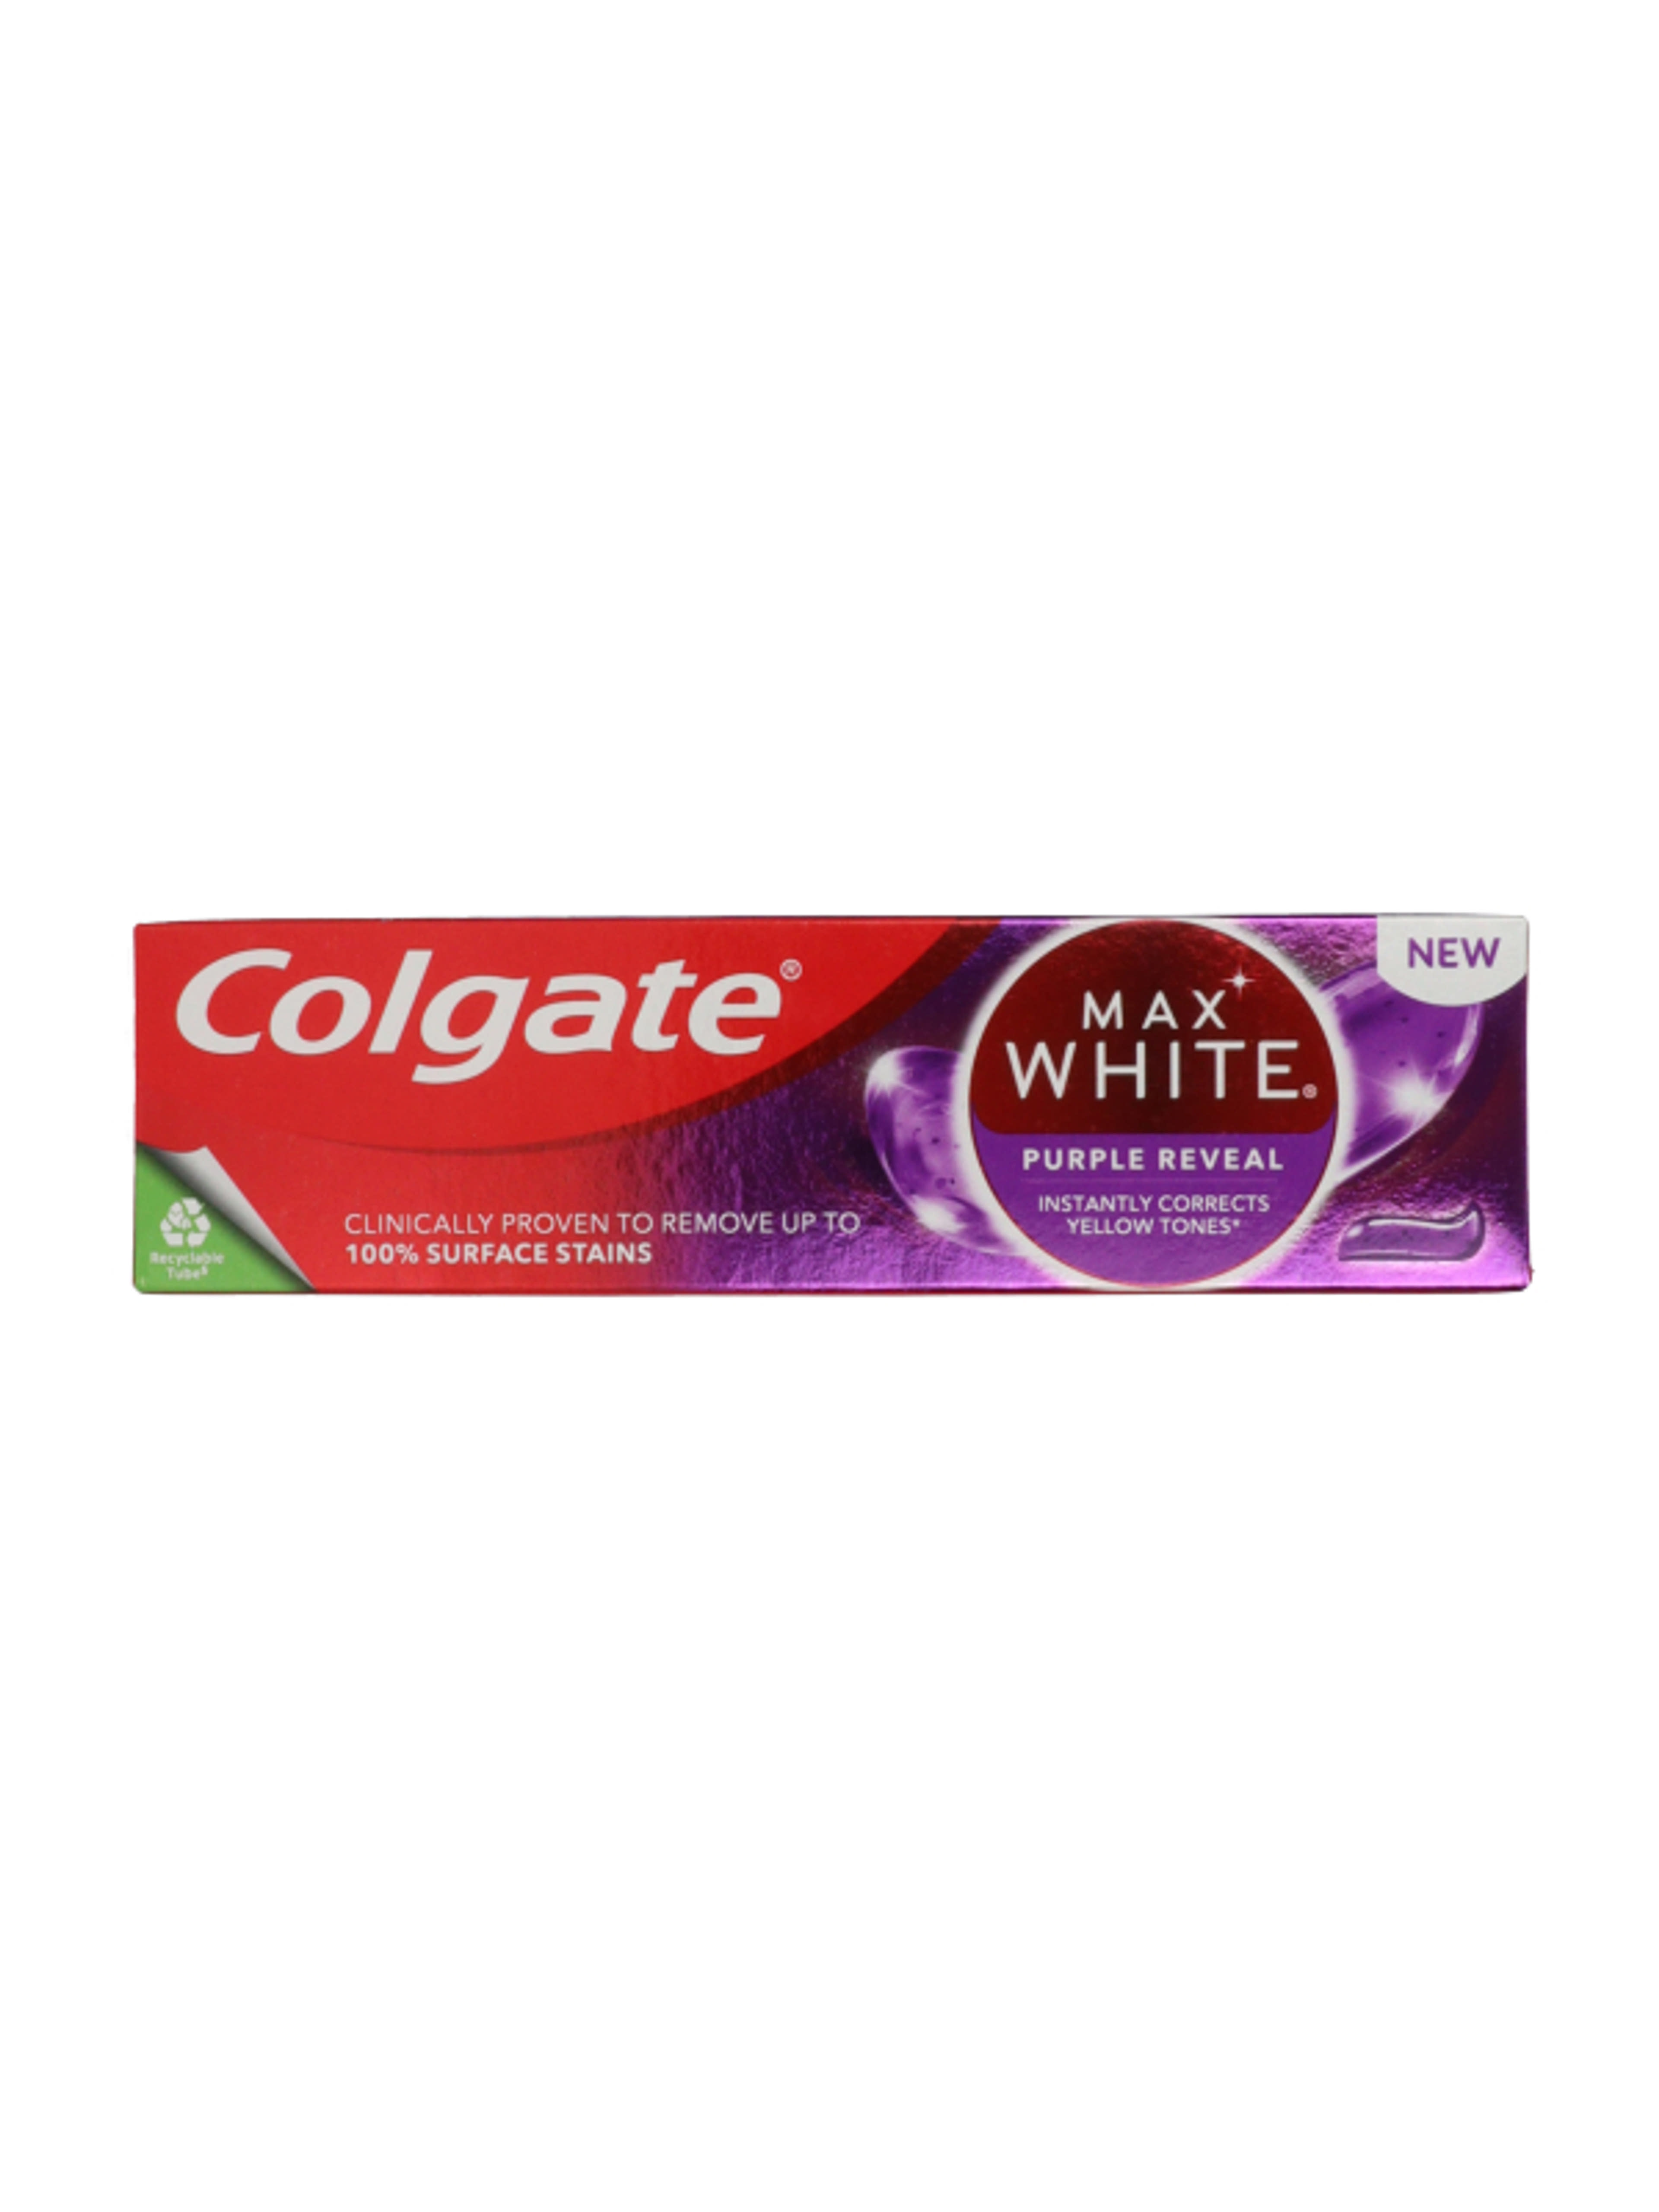 Colgate Max White Purple Reveal fogfehérítő fogkrém - 75 ml-12